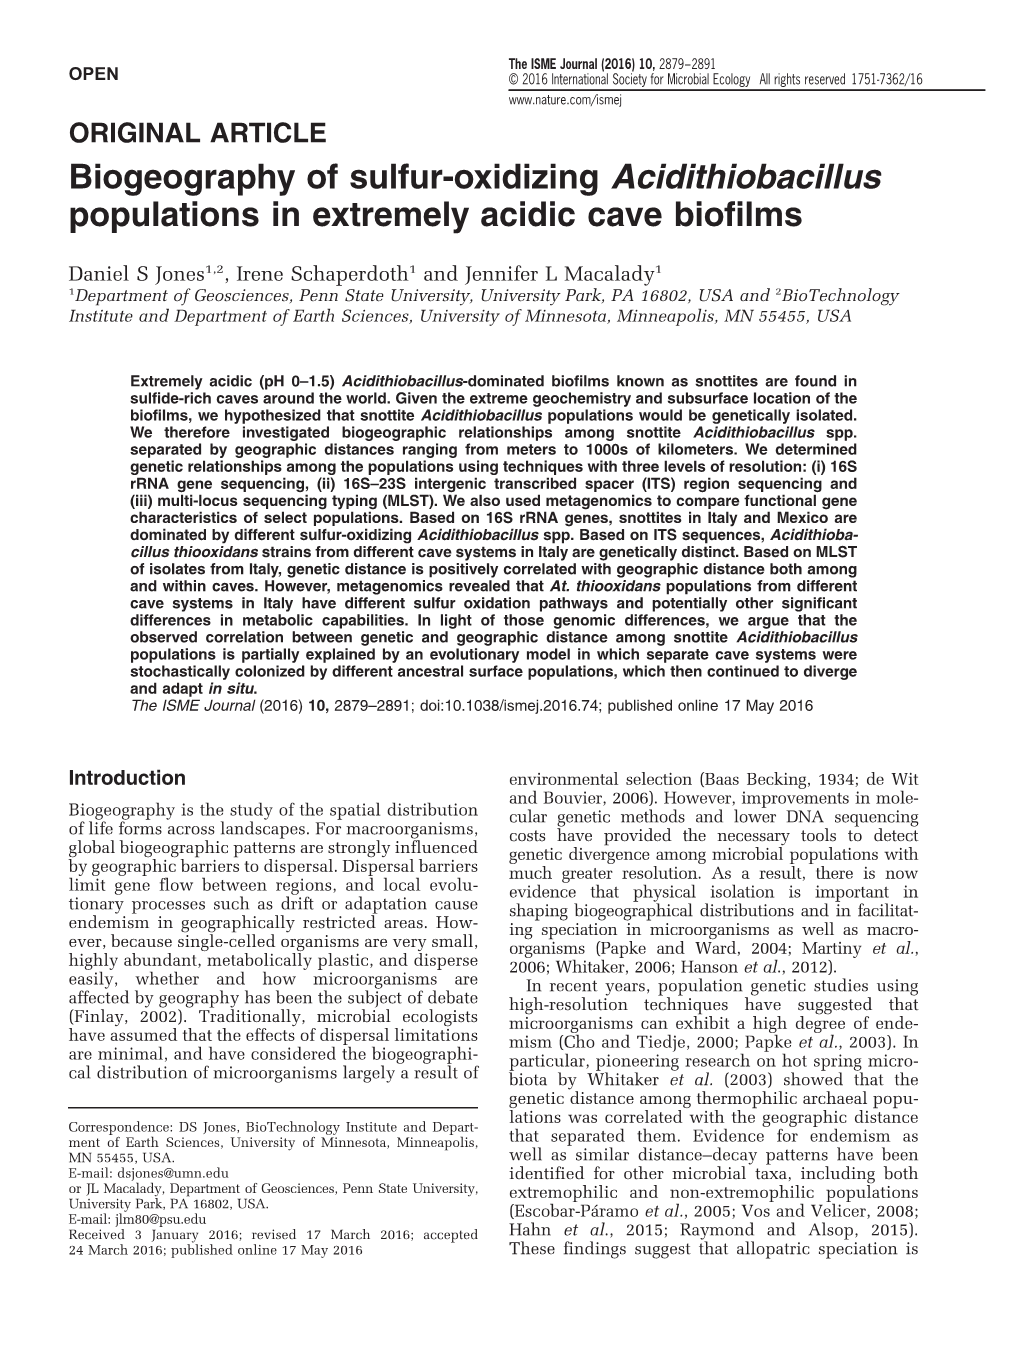 Biogeography of Sulfur-Oxidizing Acidithiobacillus Populations in Extremely Acidic Cave Biofilms